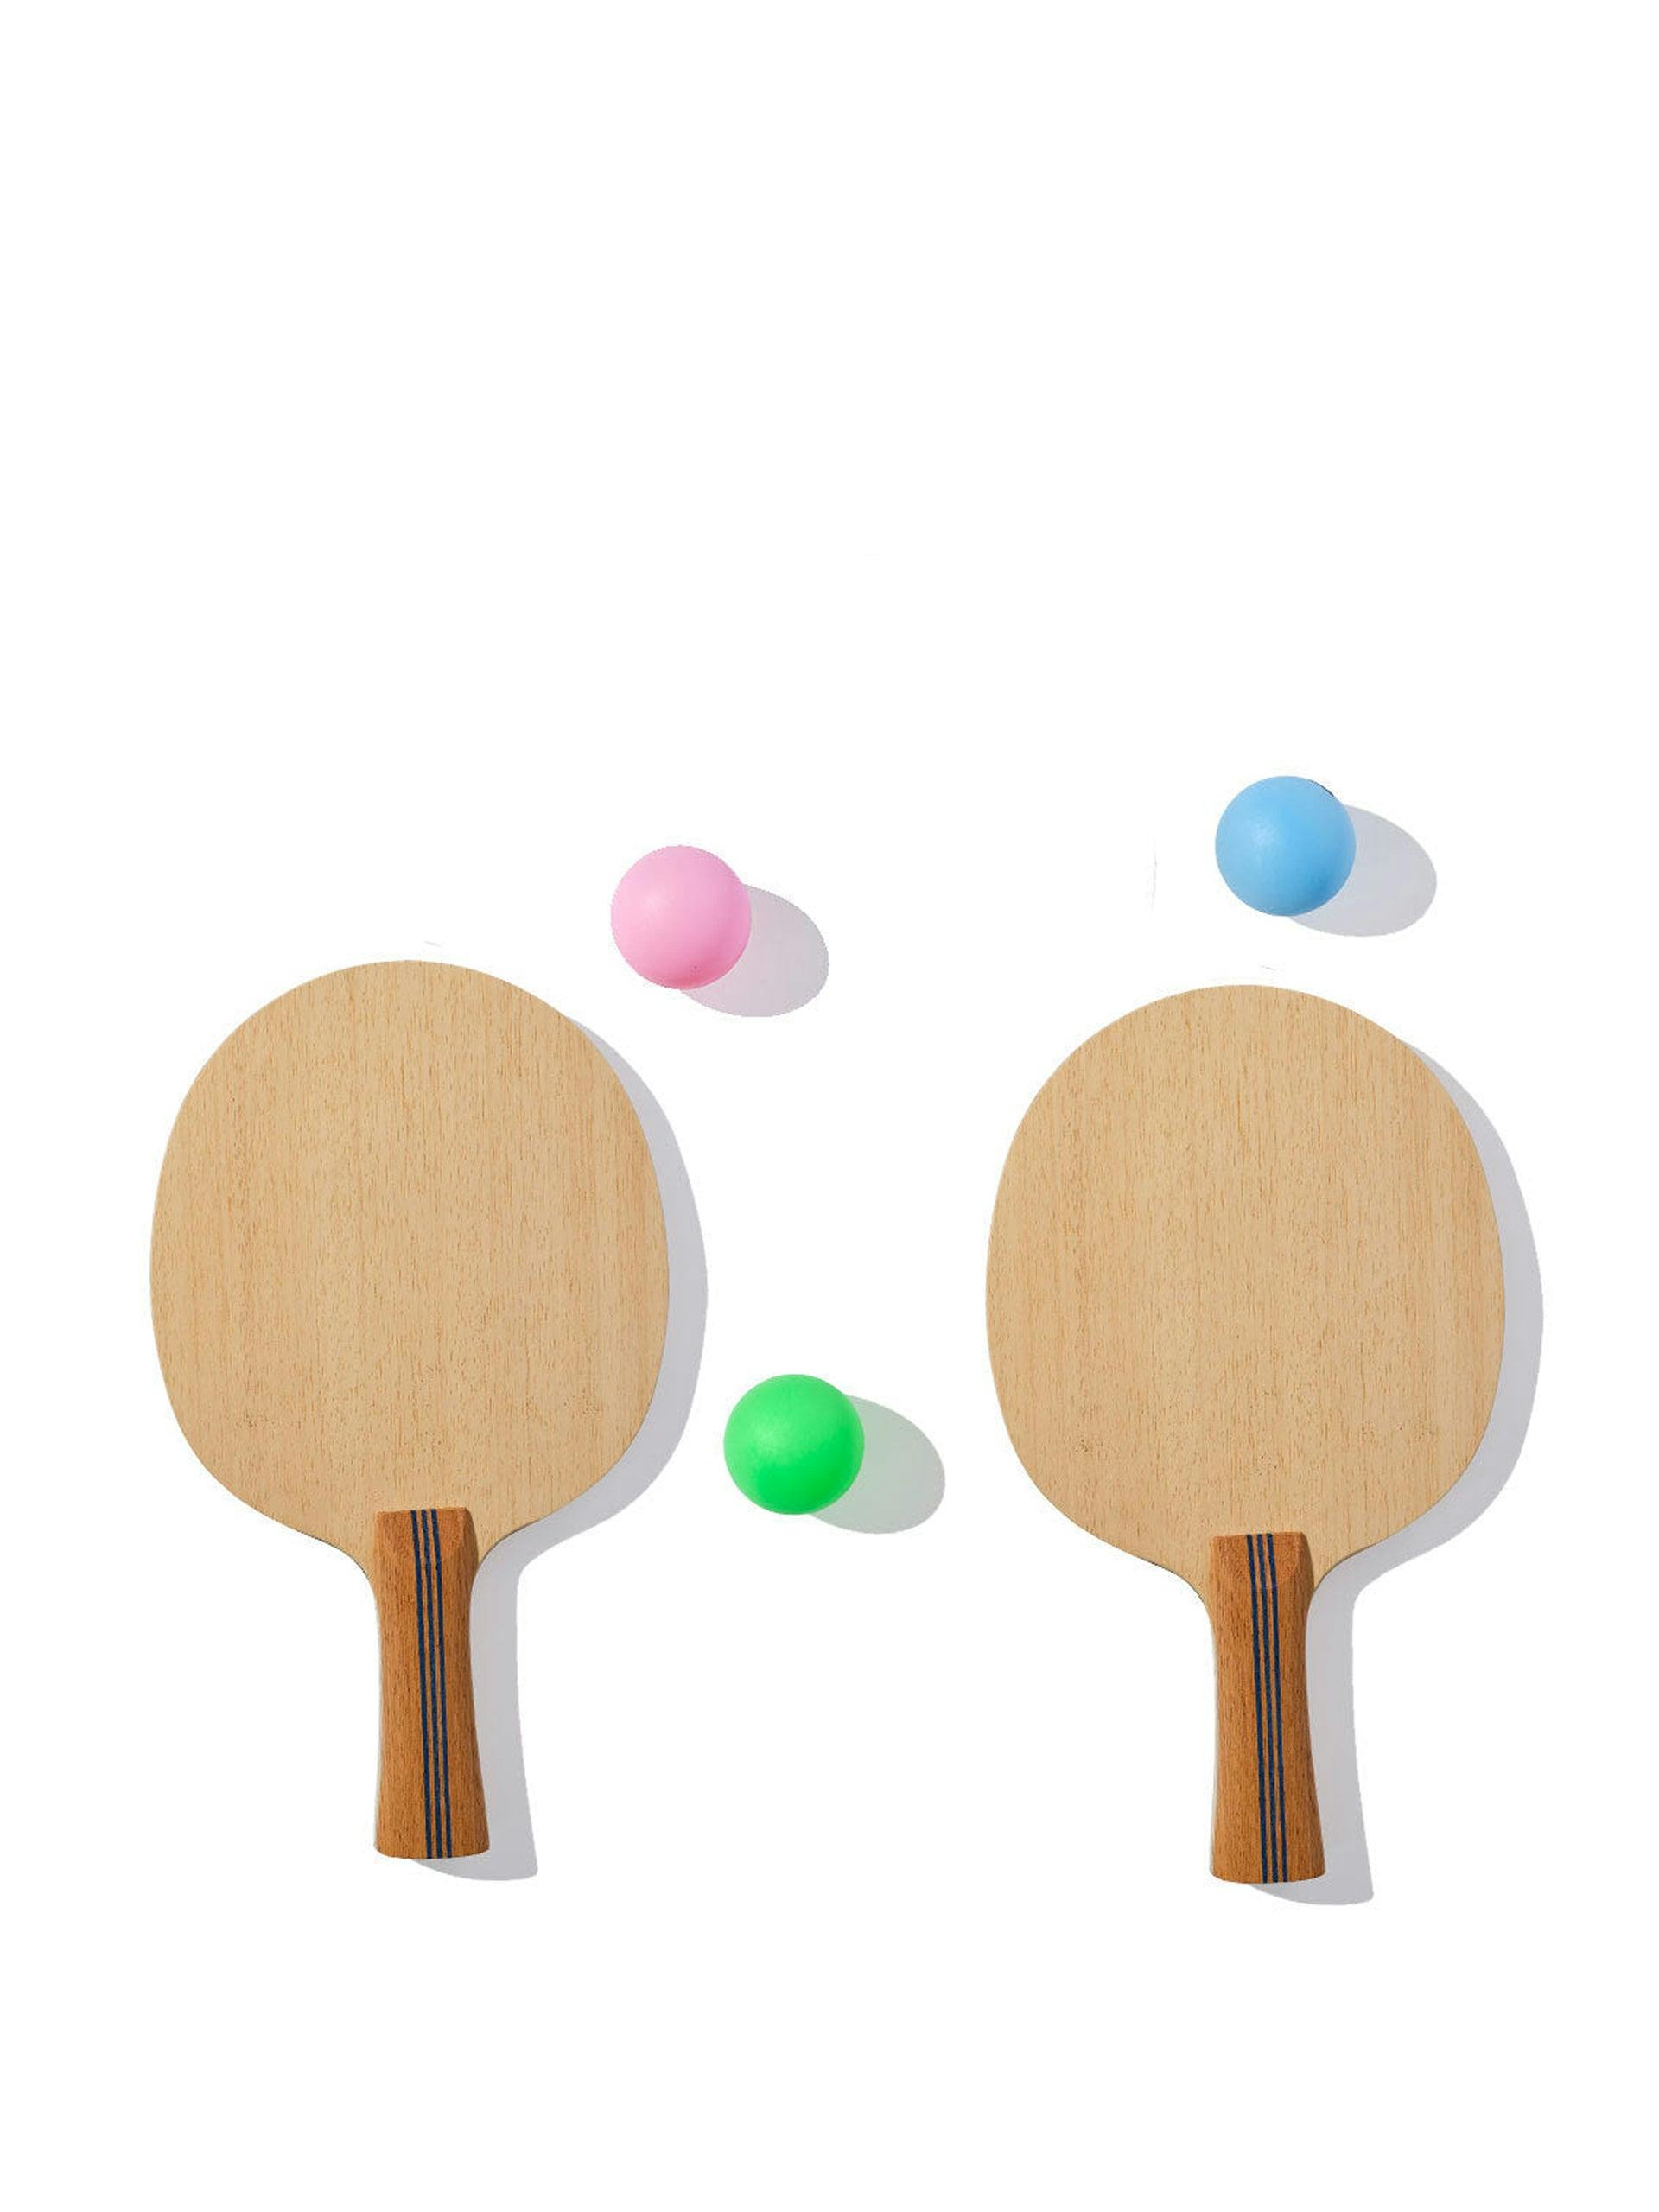 Ping Pong bats (set of 2)